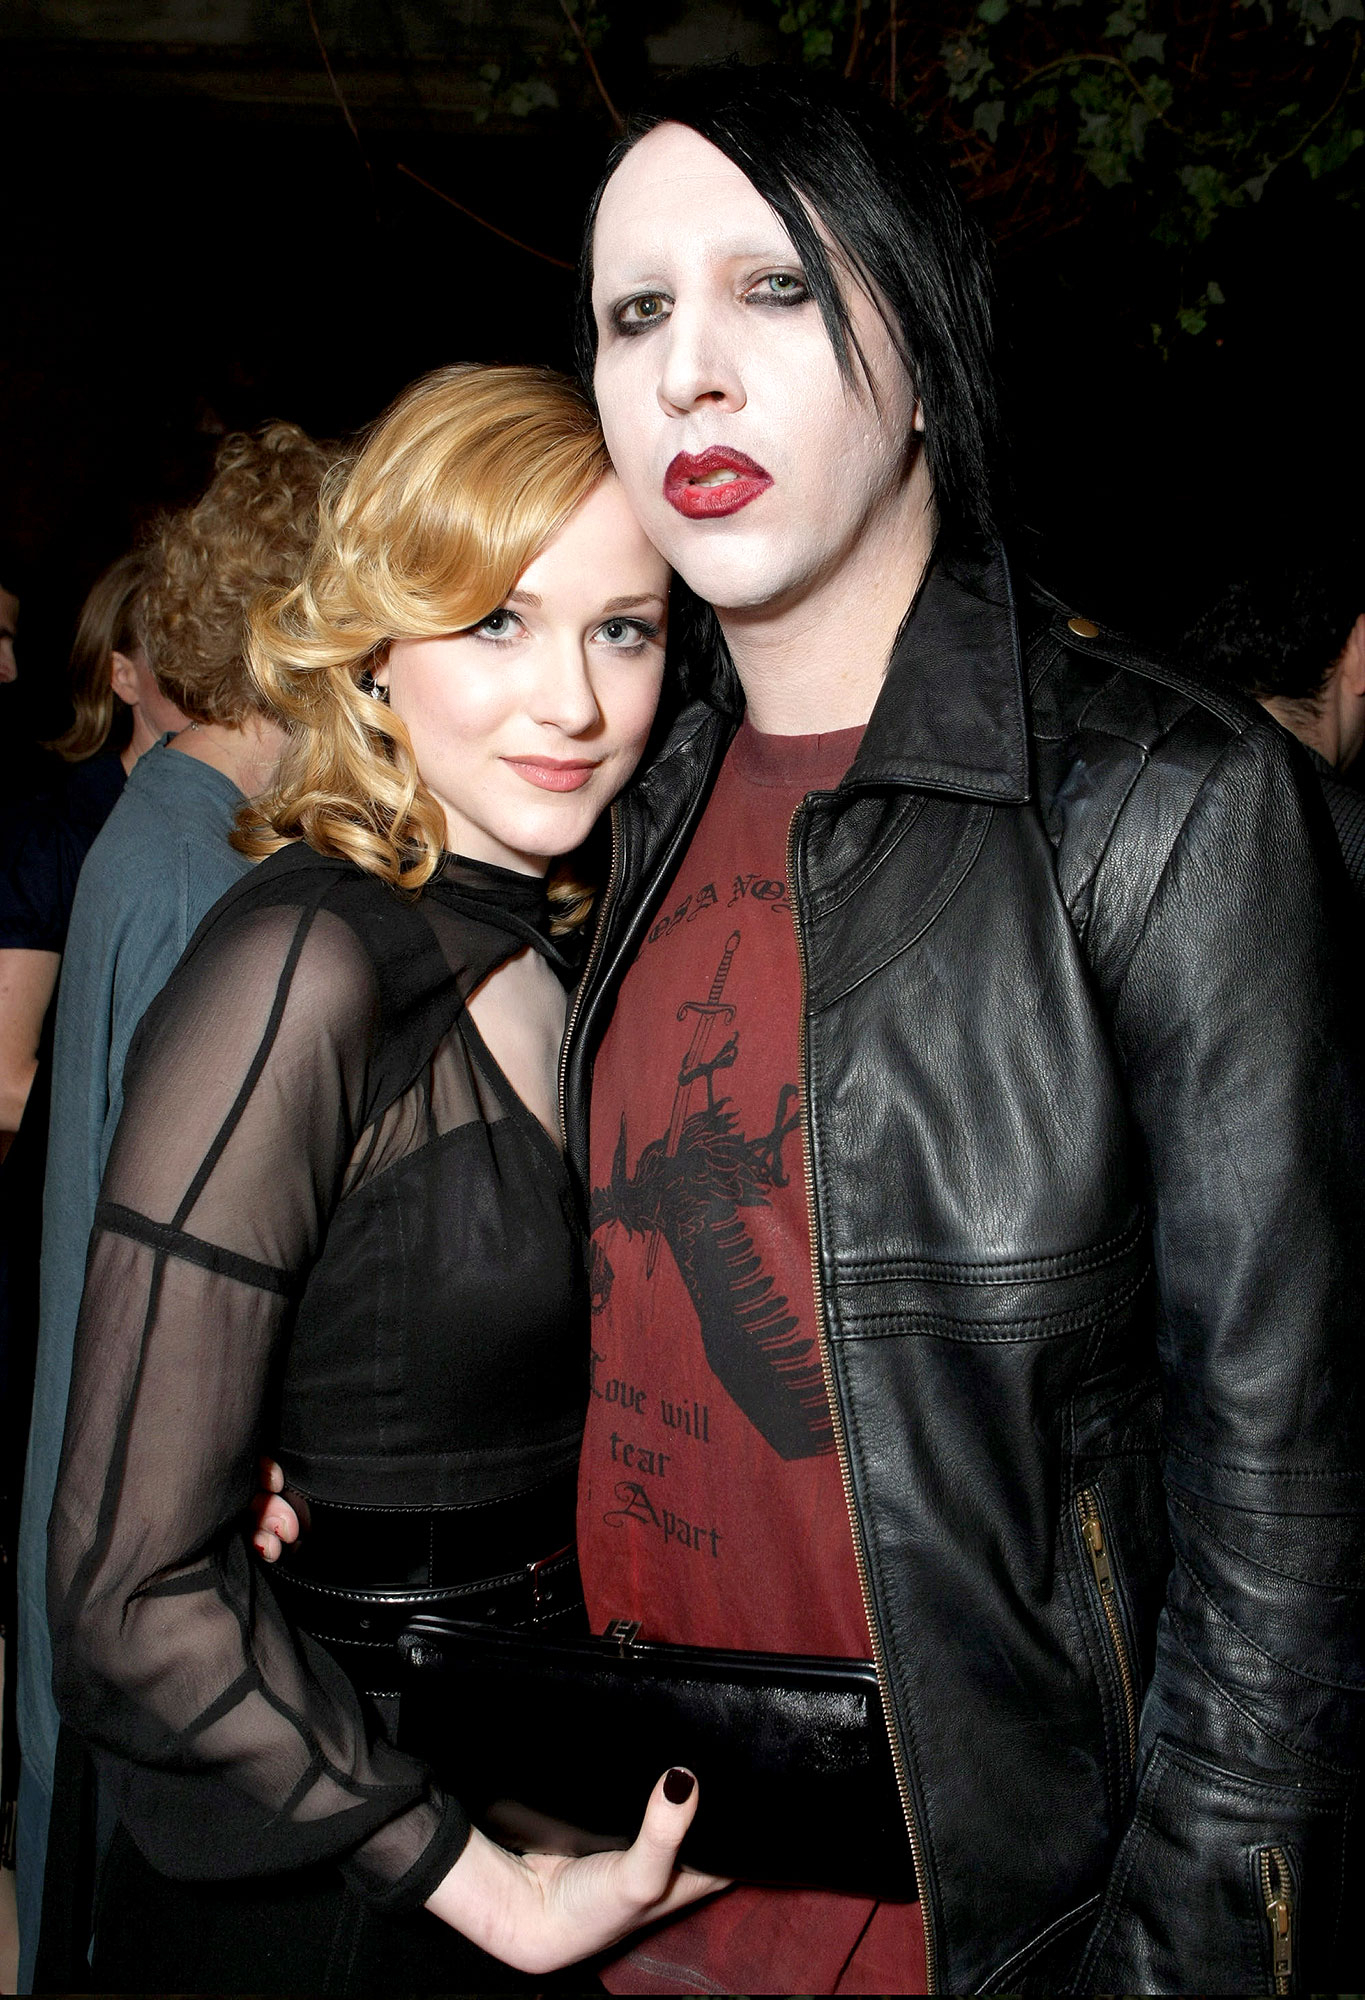 Evan Rachel Wood Talks Controversial Romance With Marilyn Manson